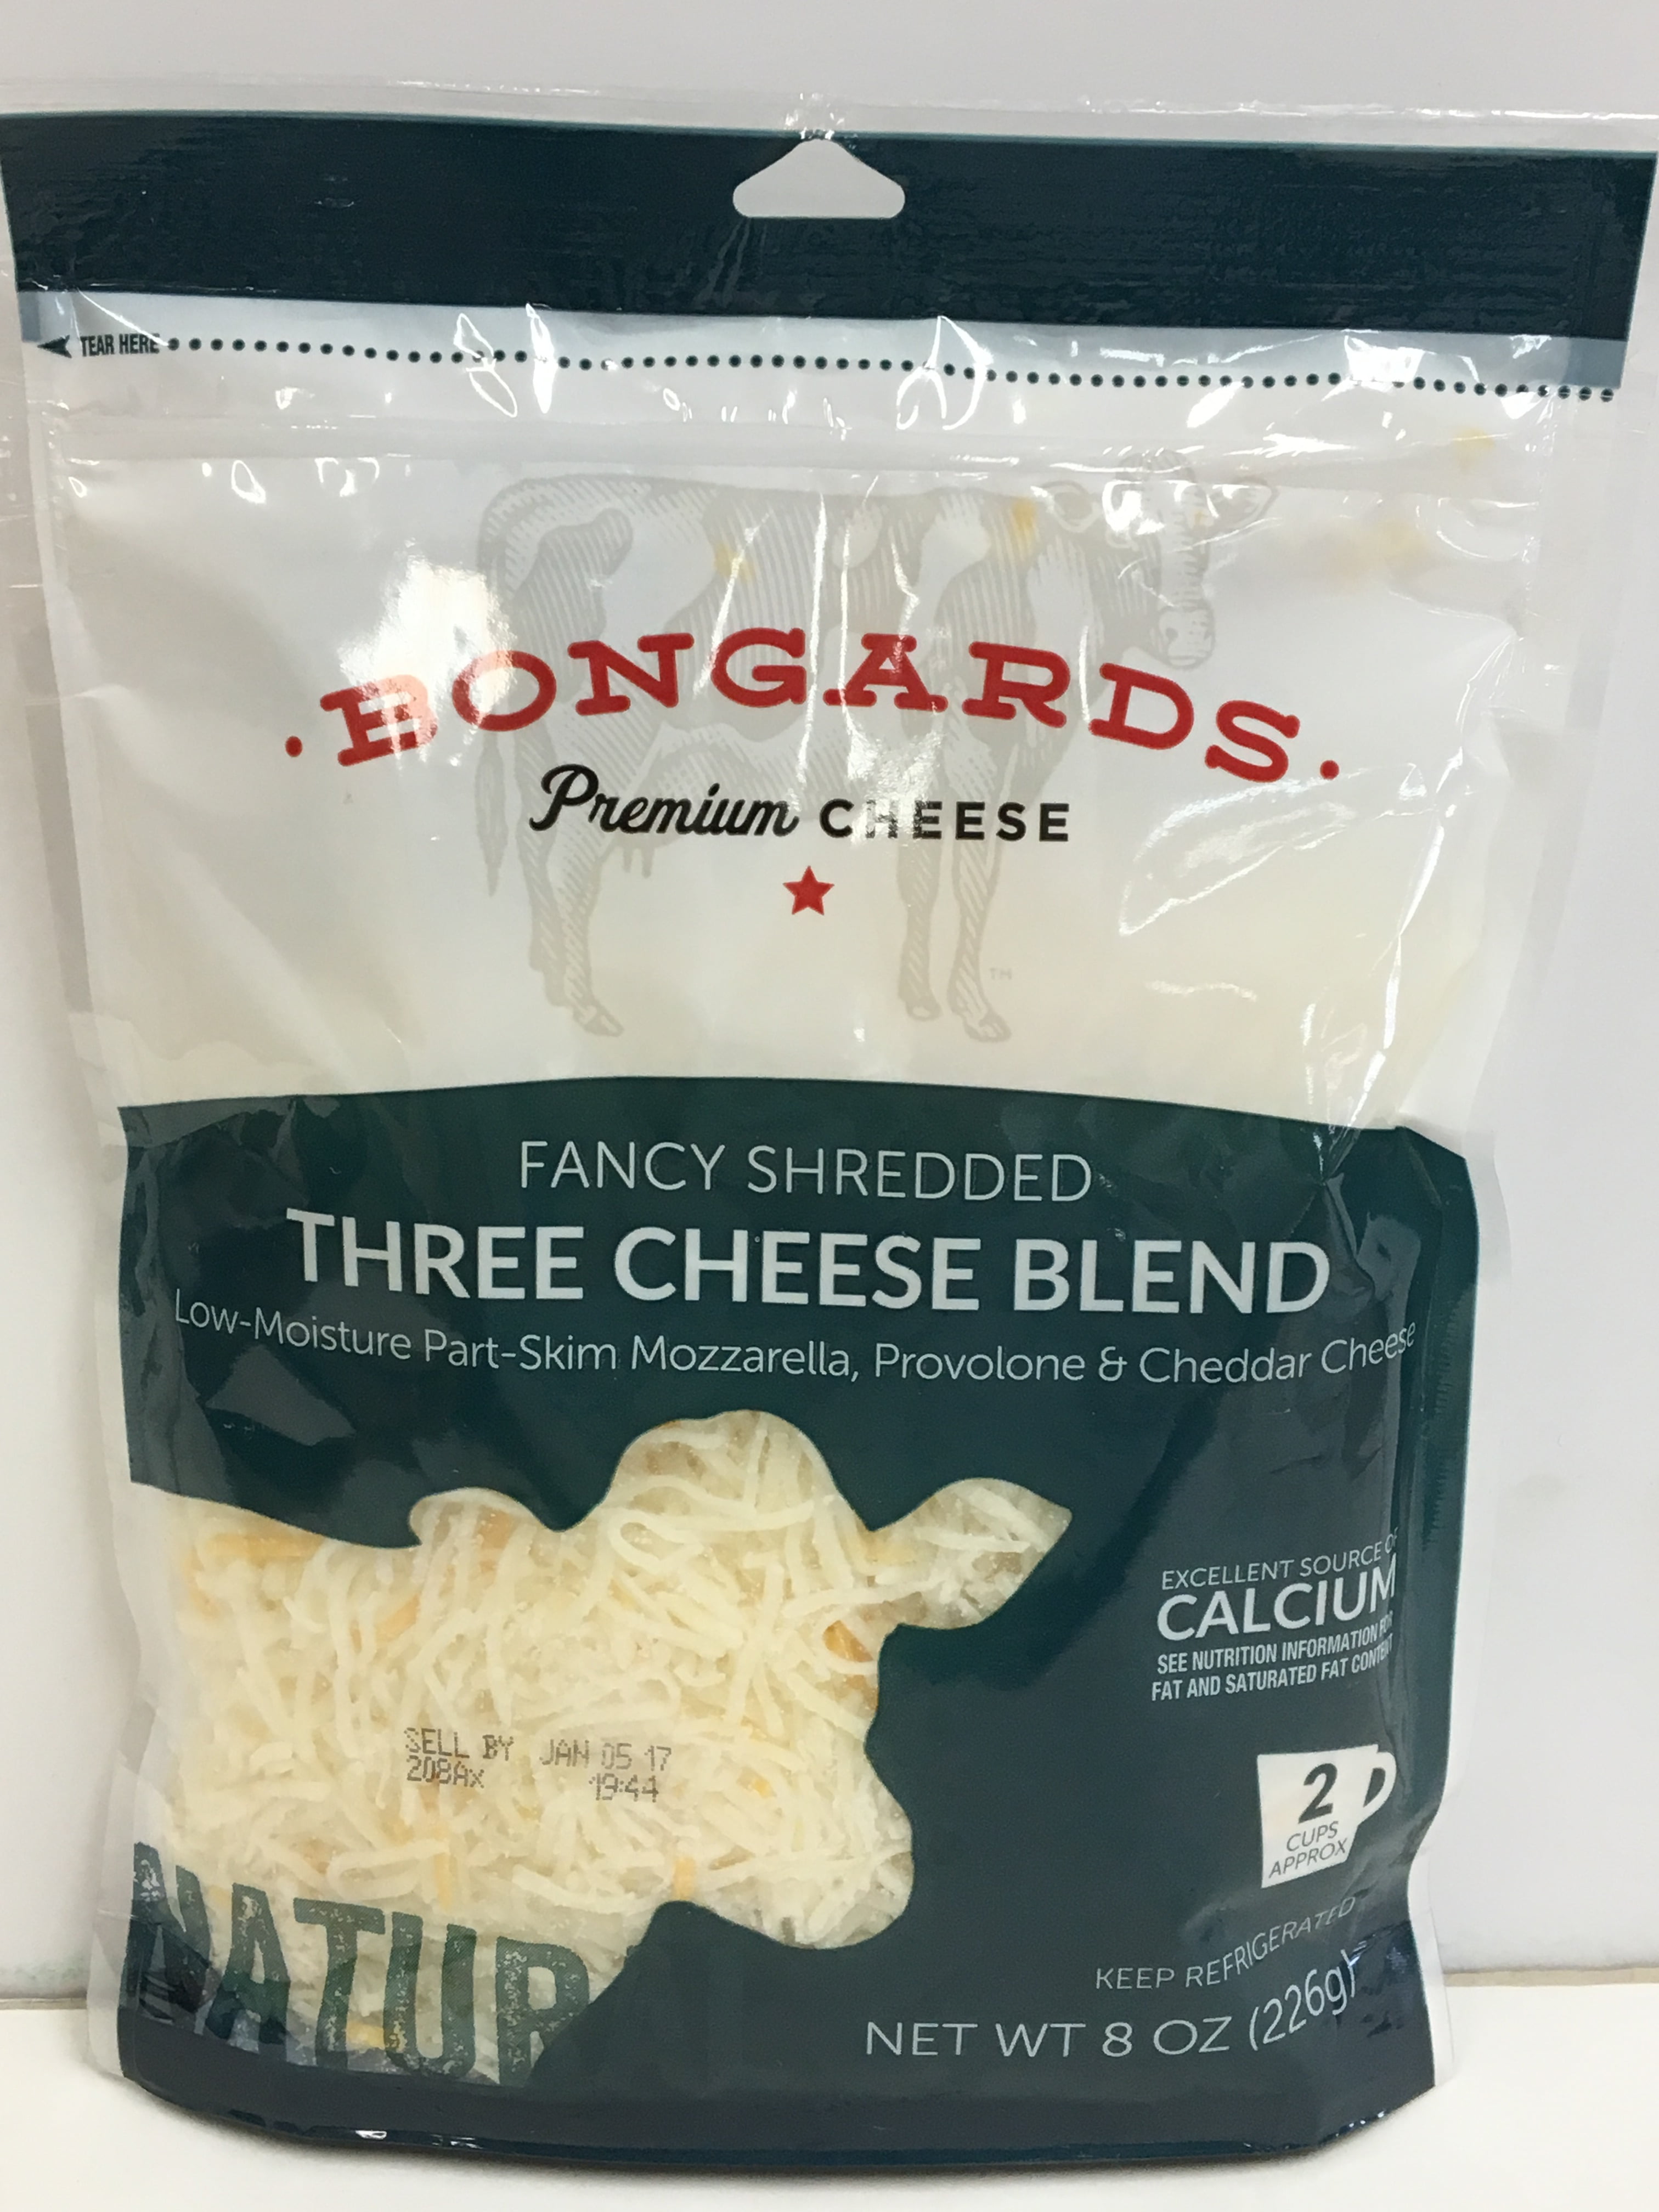 Bongards Premium Cheese Fancy Shredded Three Cheese Blend ...